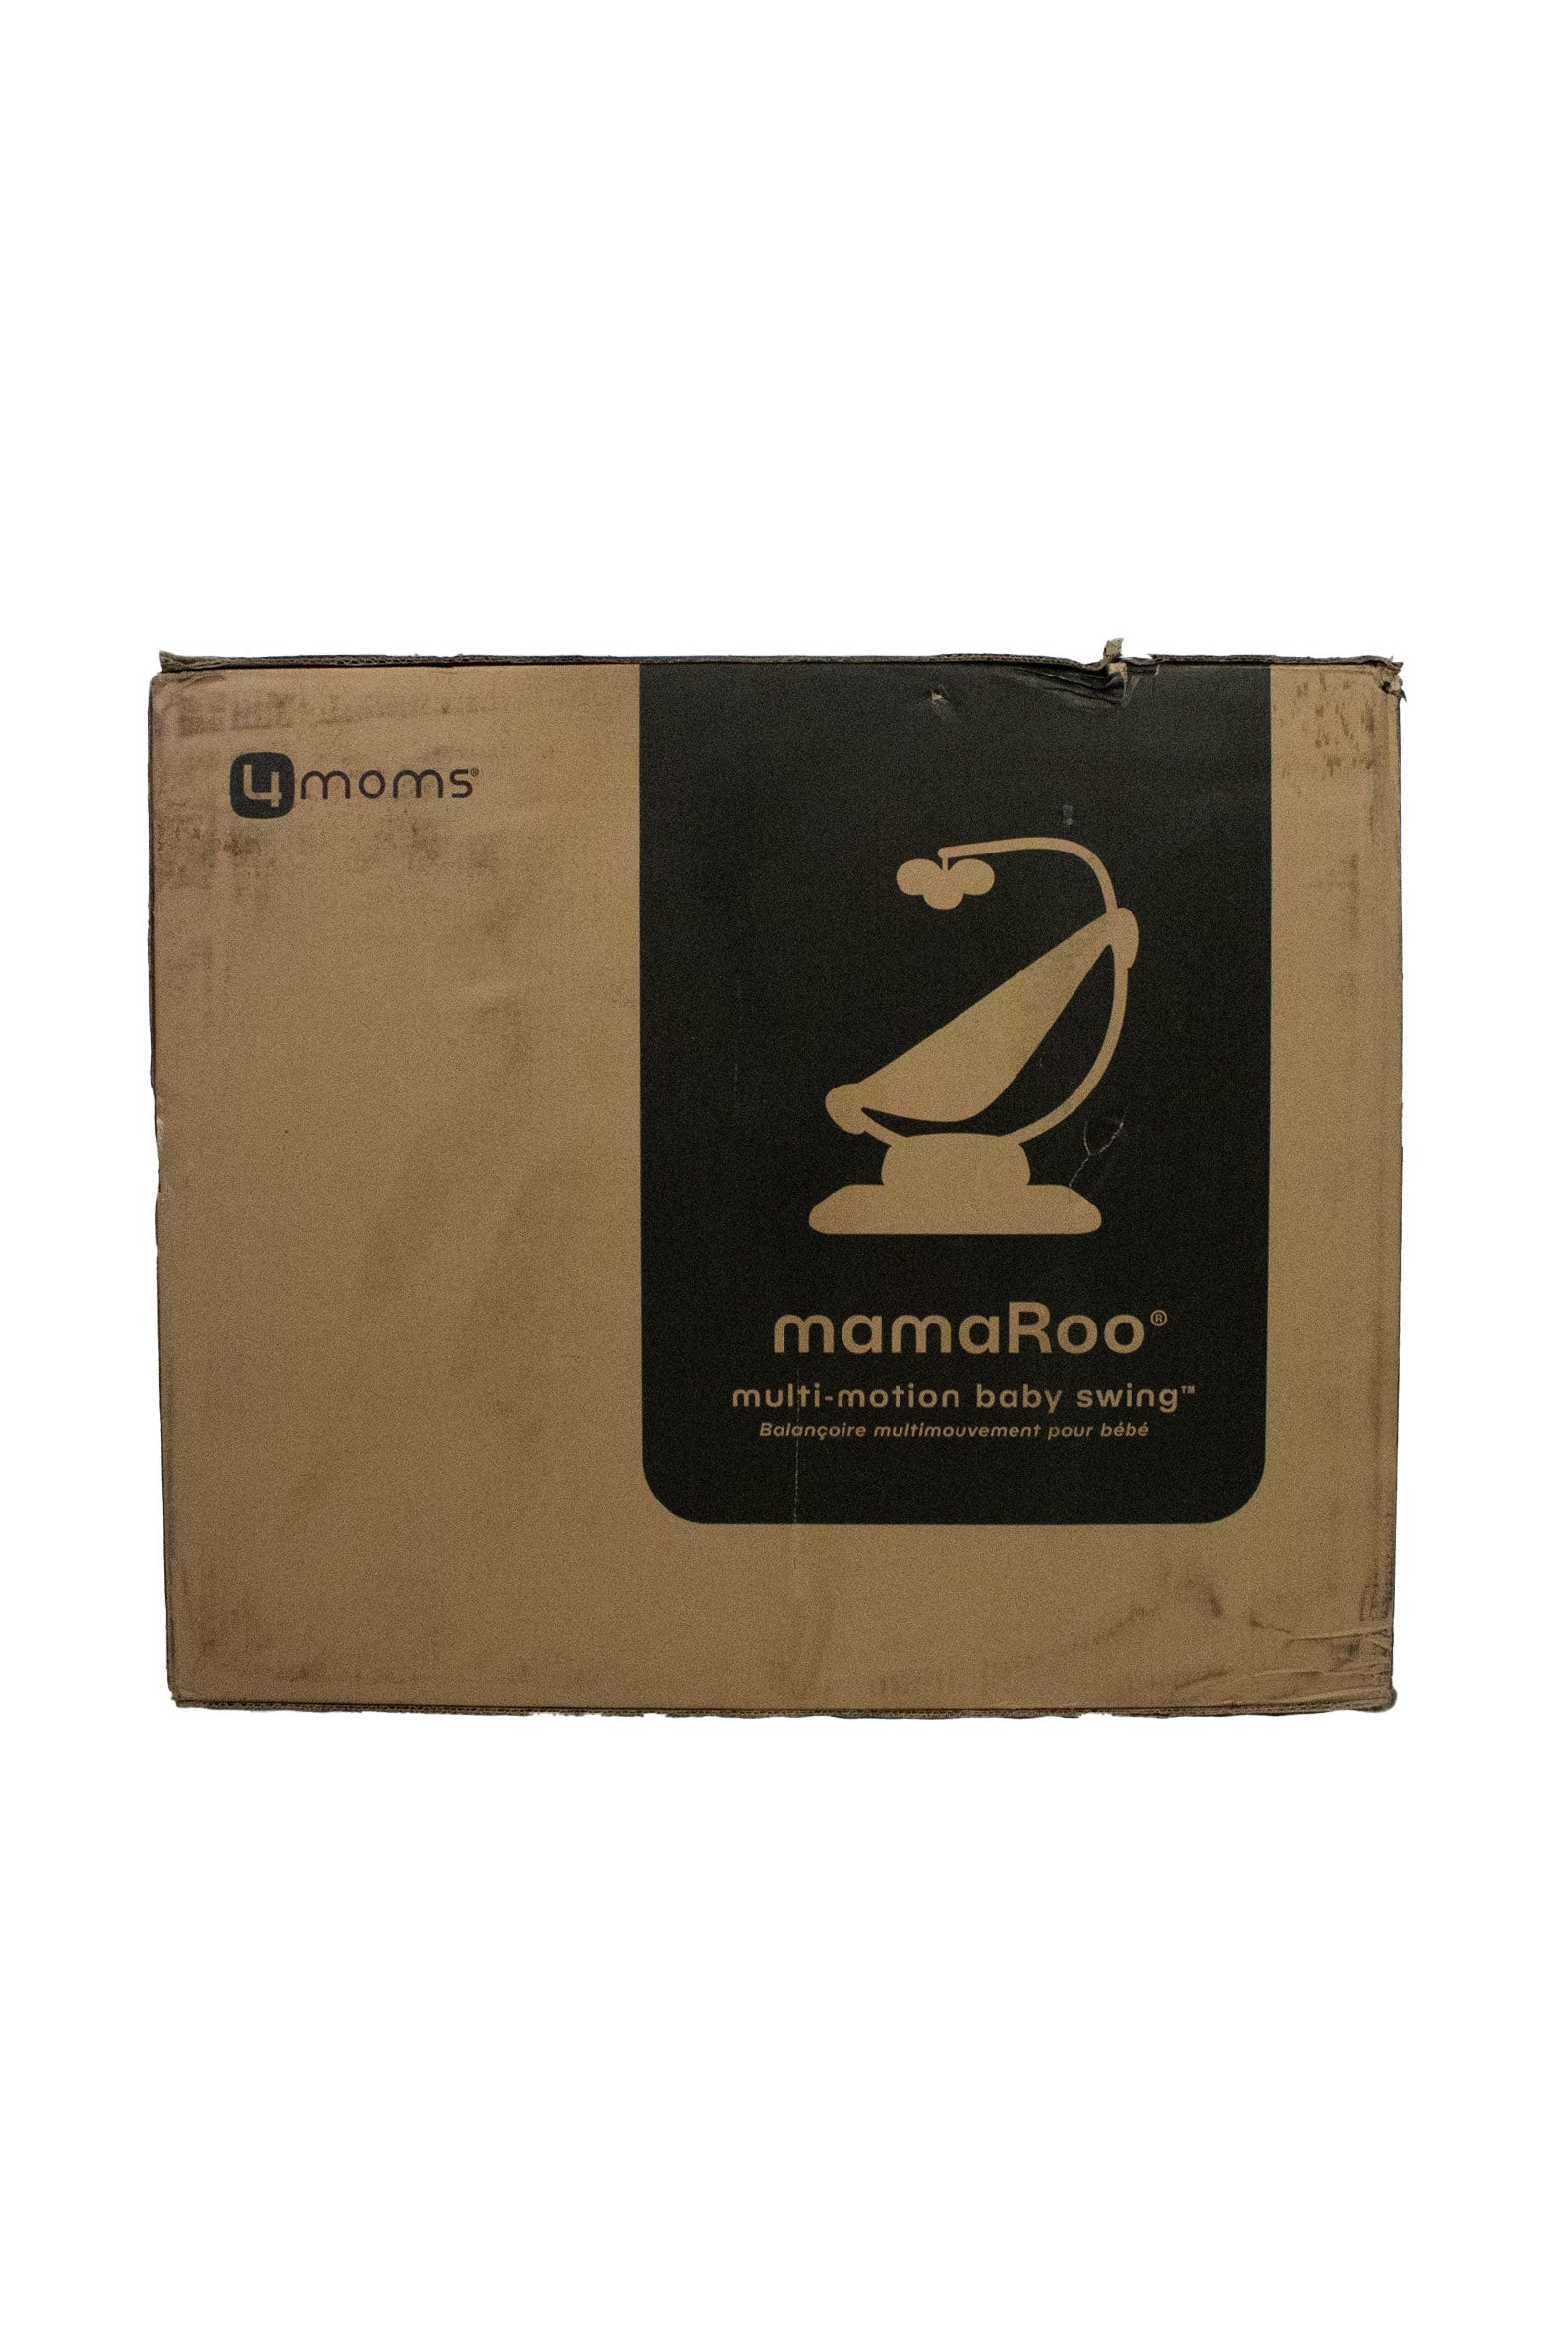 4Moms mamaRoo 5 Multi-Motion Baby Swing - Grey Classic - Factory